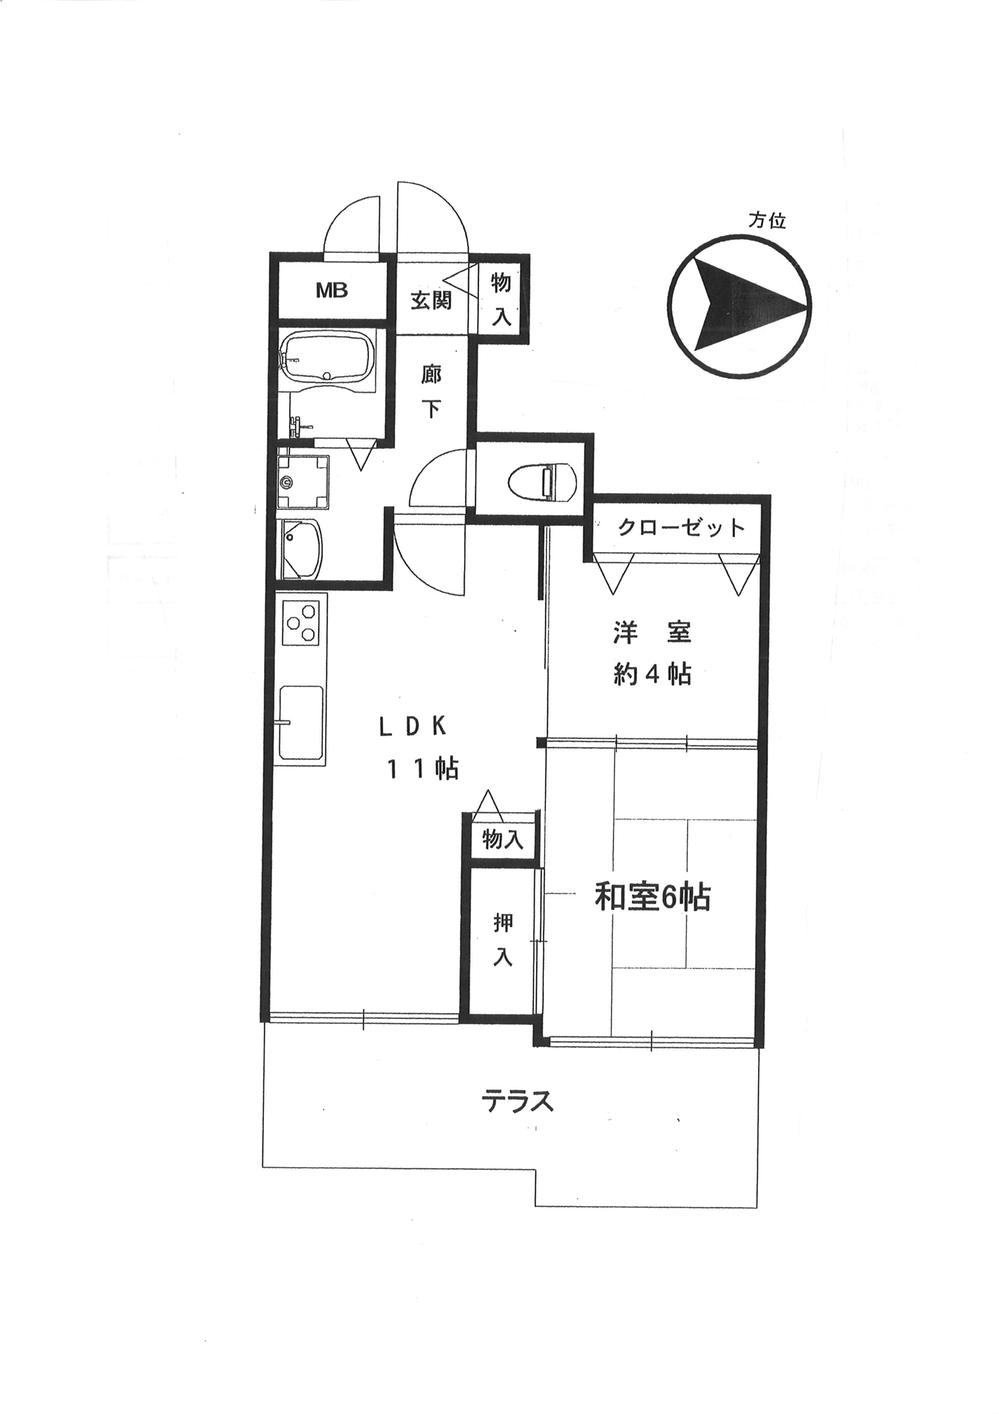 Floor plan. 2LDK, Price 6.98 million yen, Occupied area 48.31 sq m